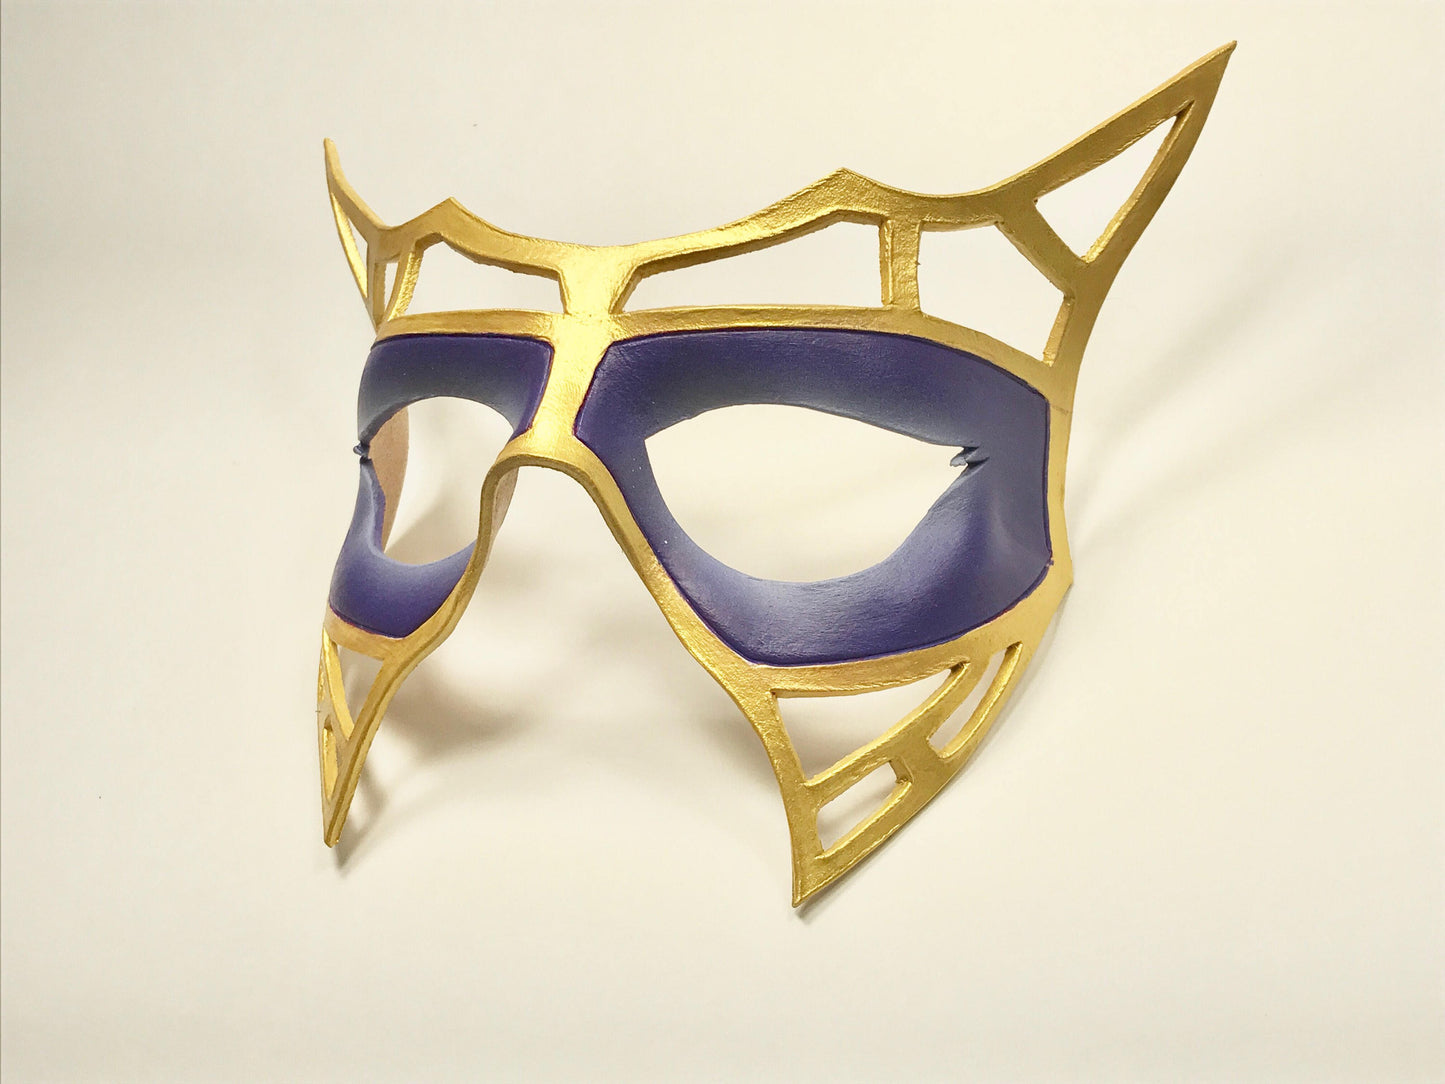 Royal Handmade Genuine Leather Mask